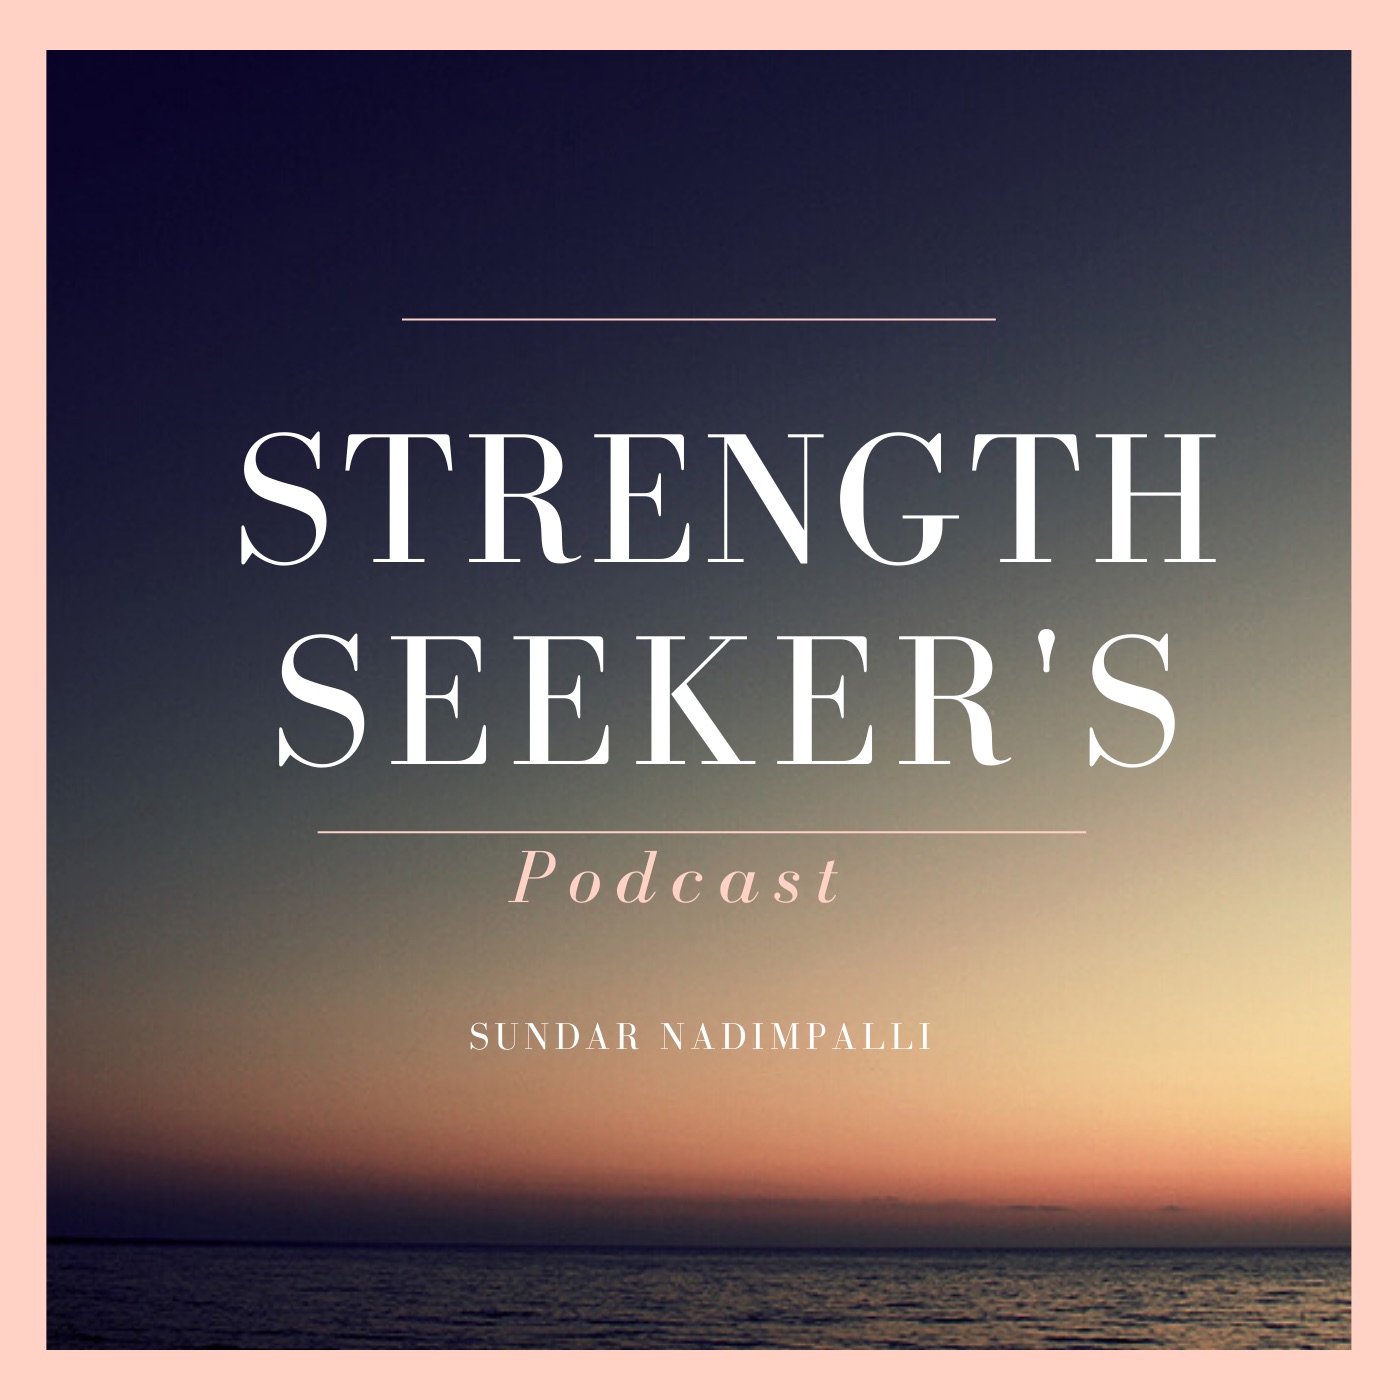 Strength Seeker's Podcast